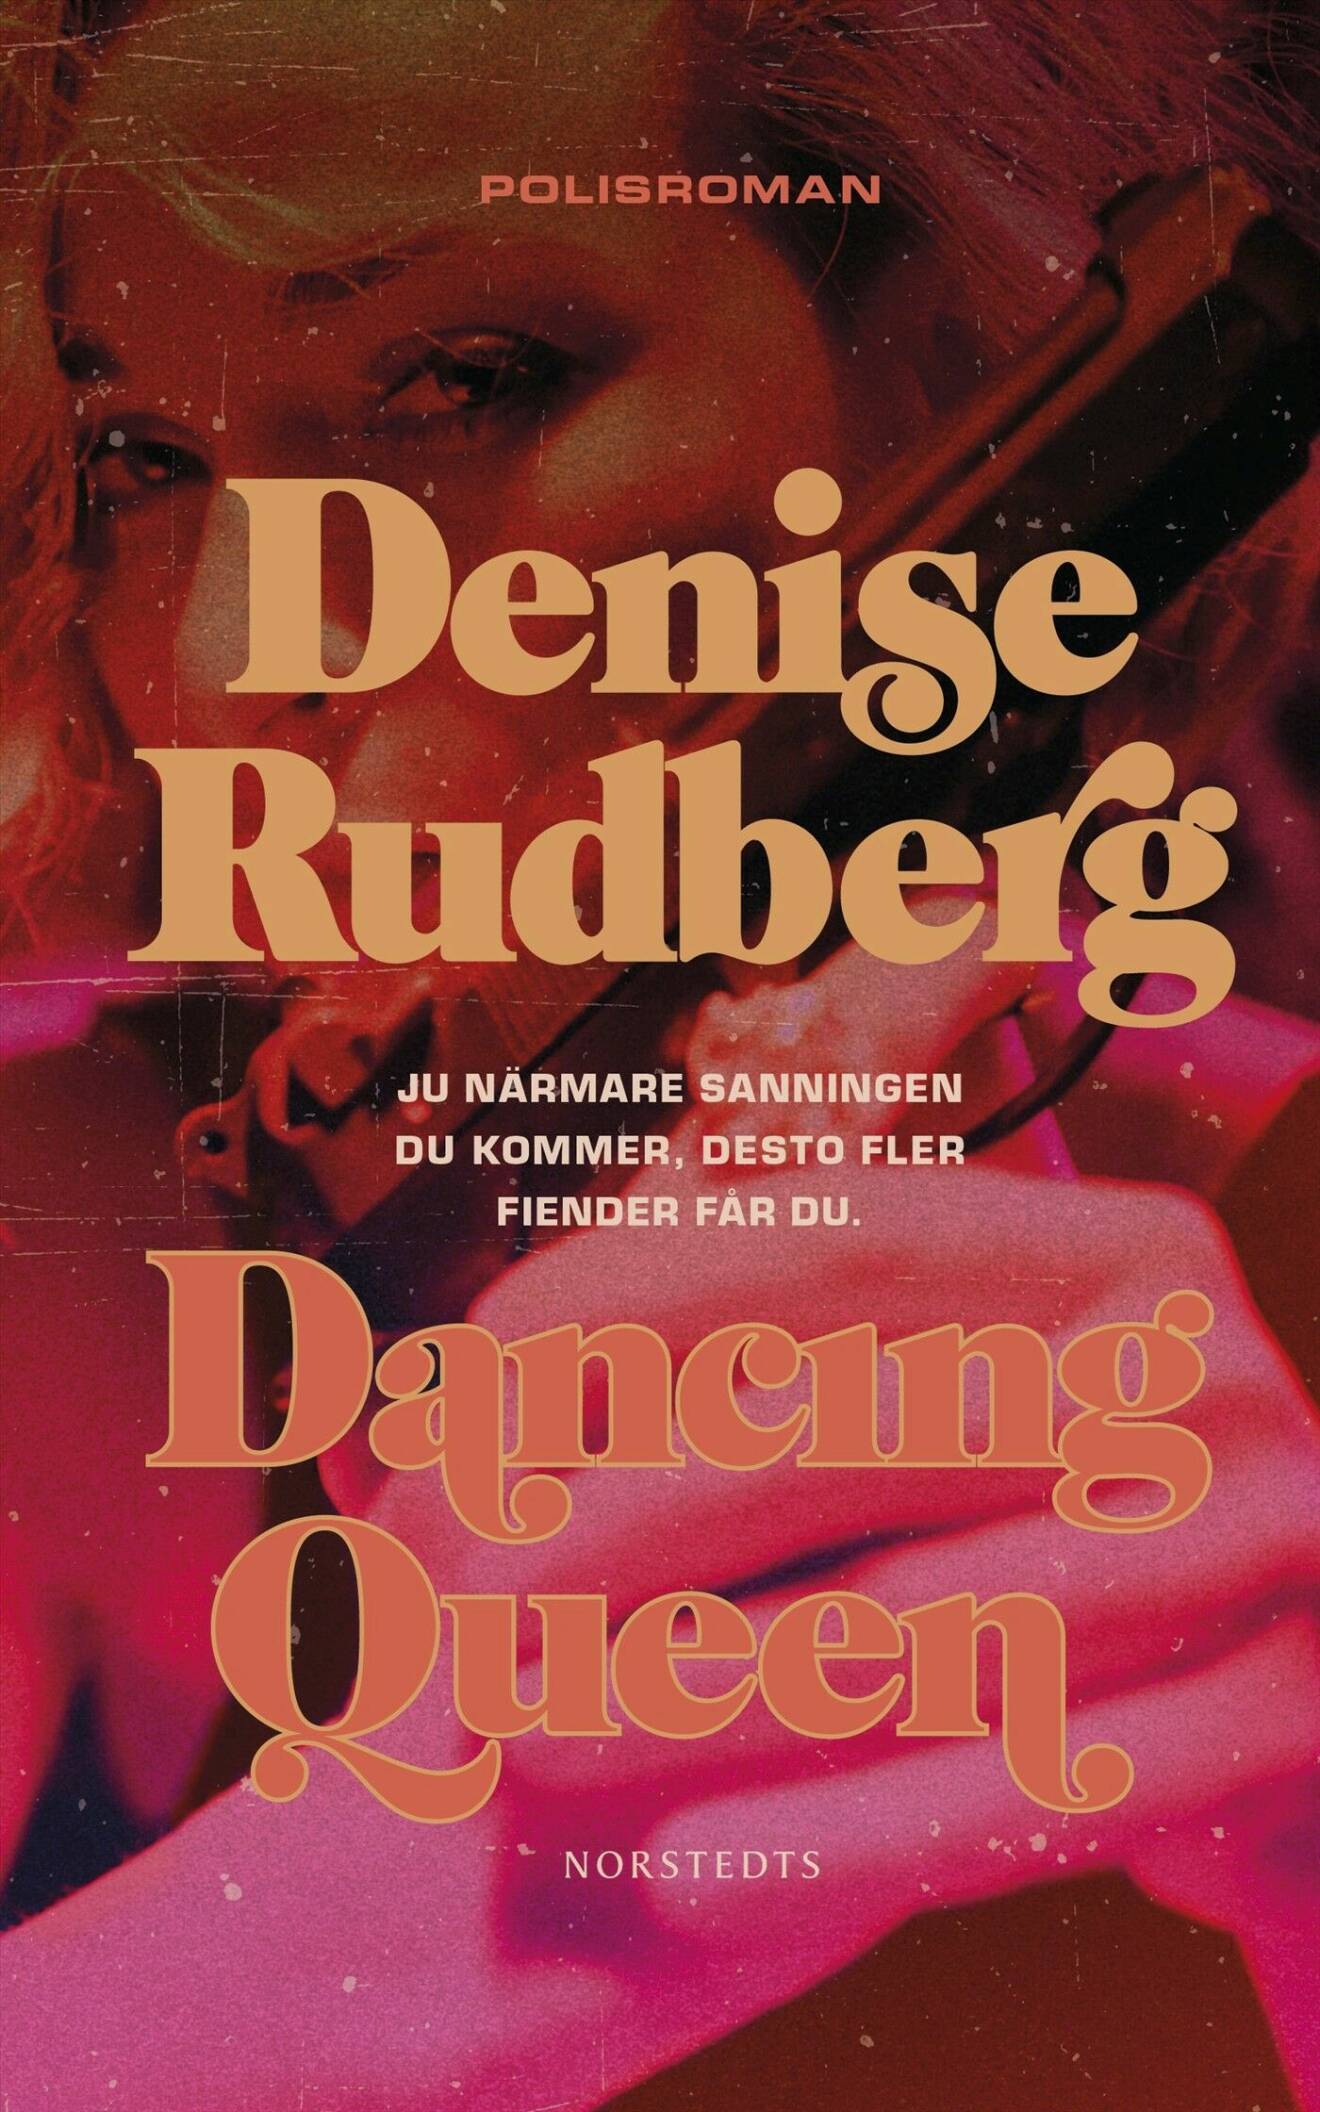 Dancing Queen av Denise Rudberg (Norstedts).